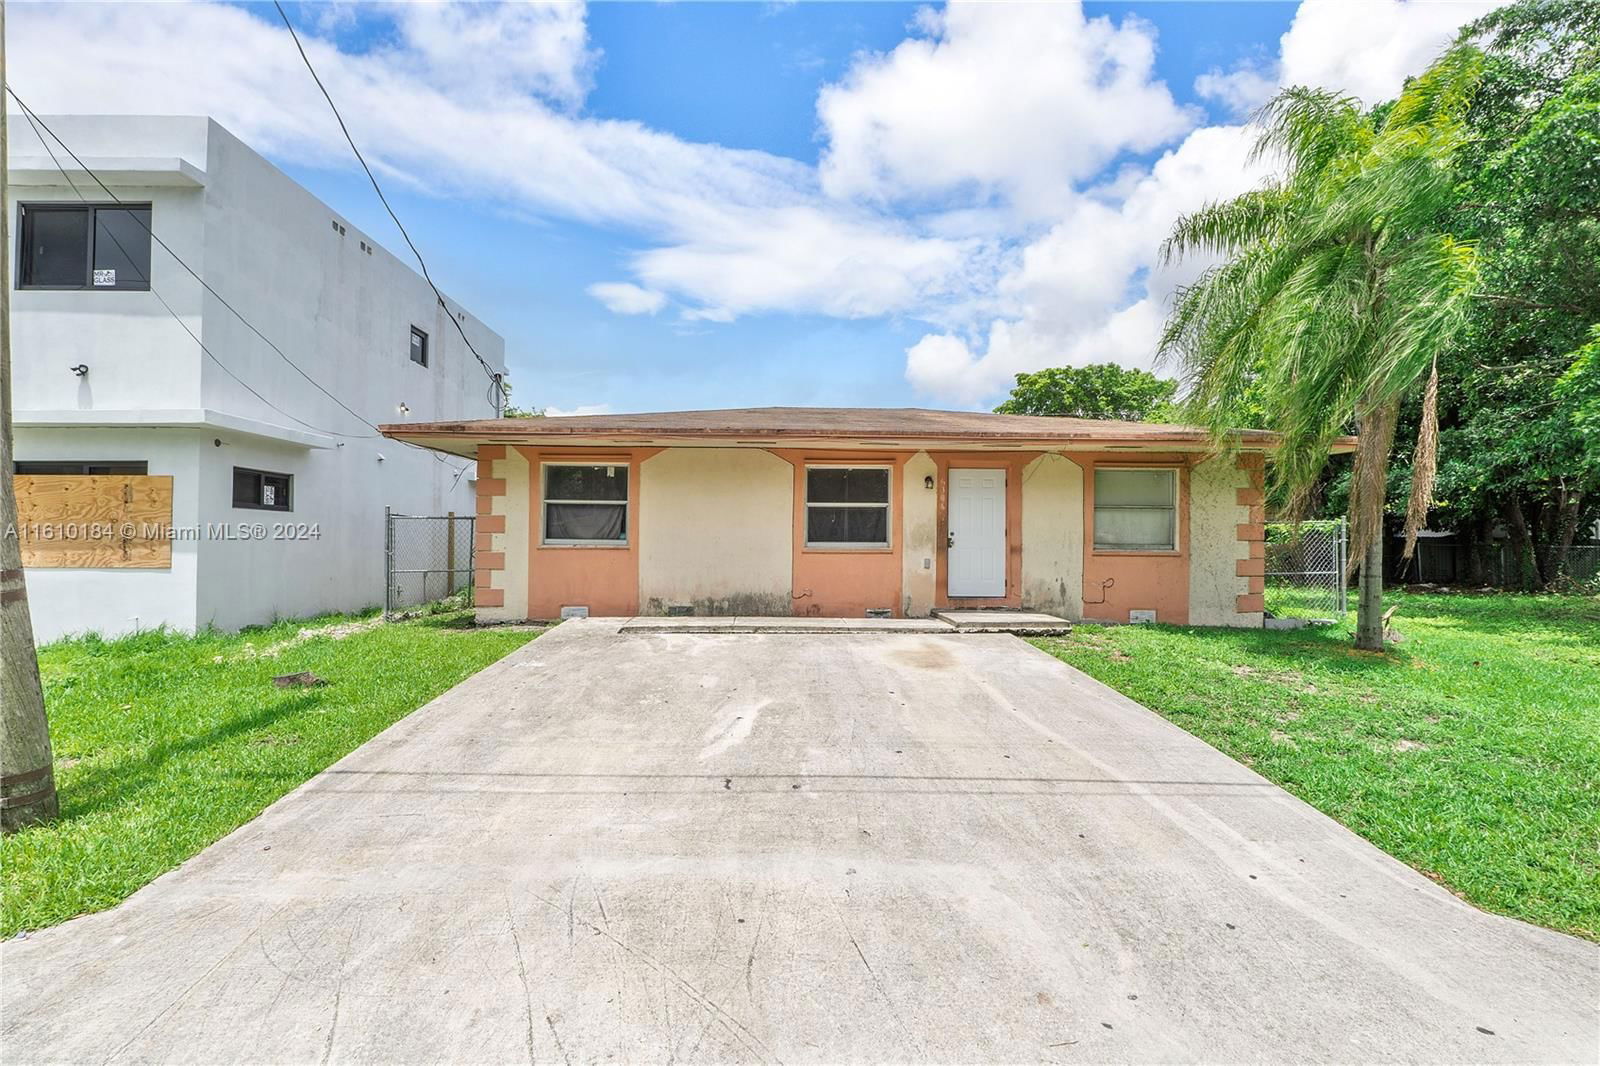 Real estate property located at 6306 19th Ct, Miami-Dade County, BULLARDS, Miami, FL